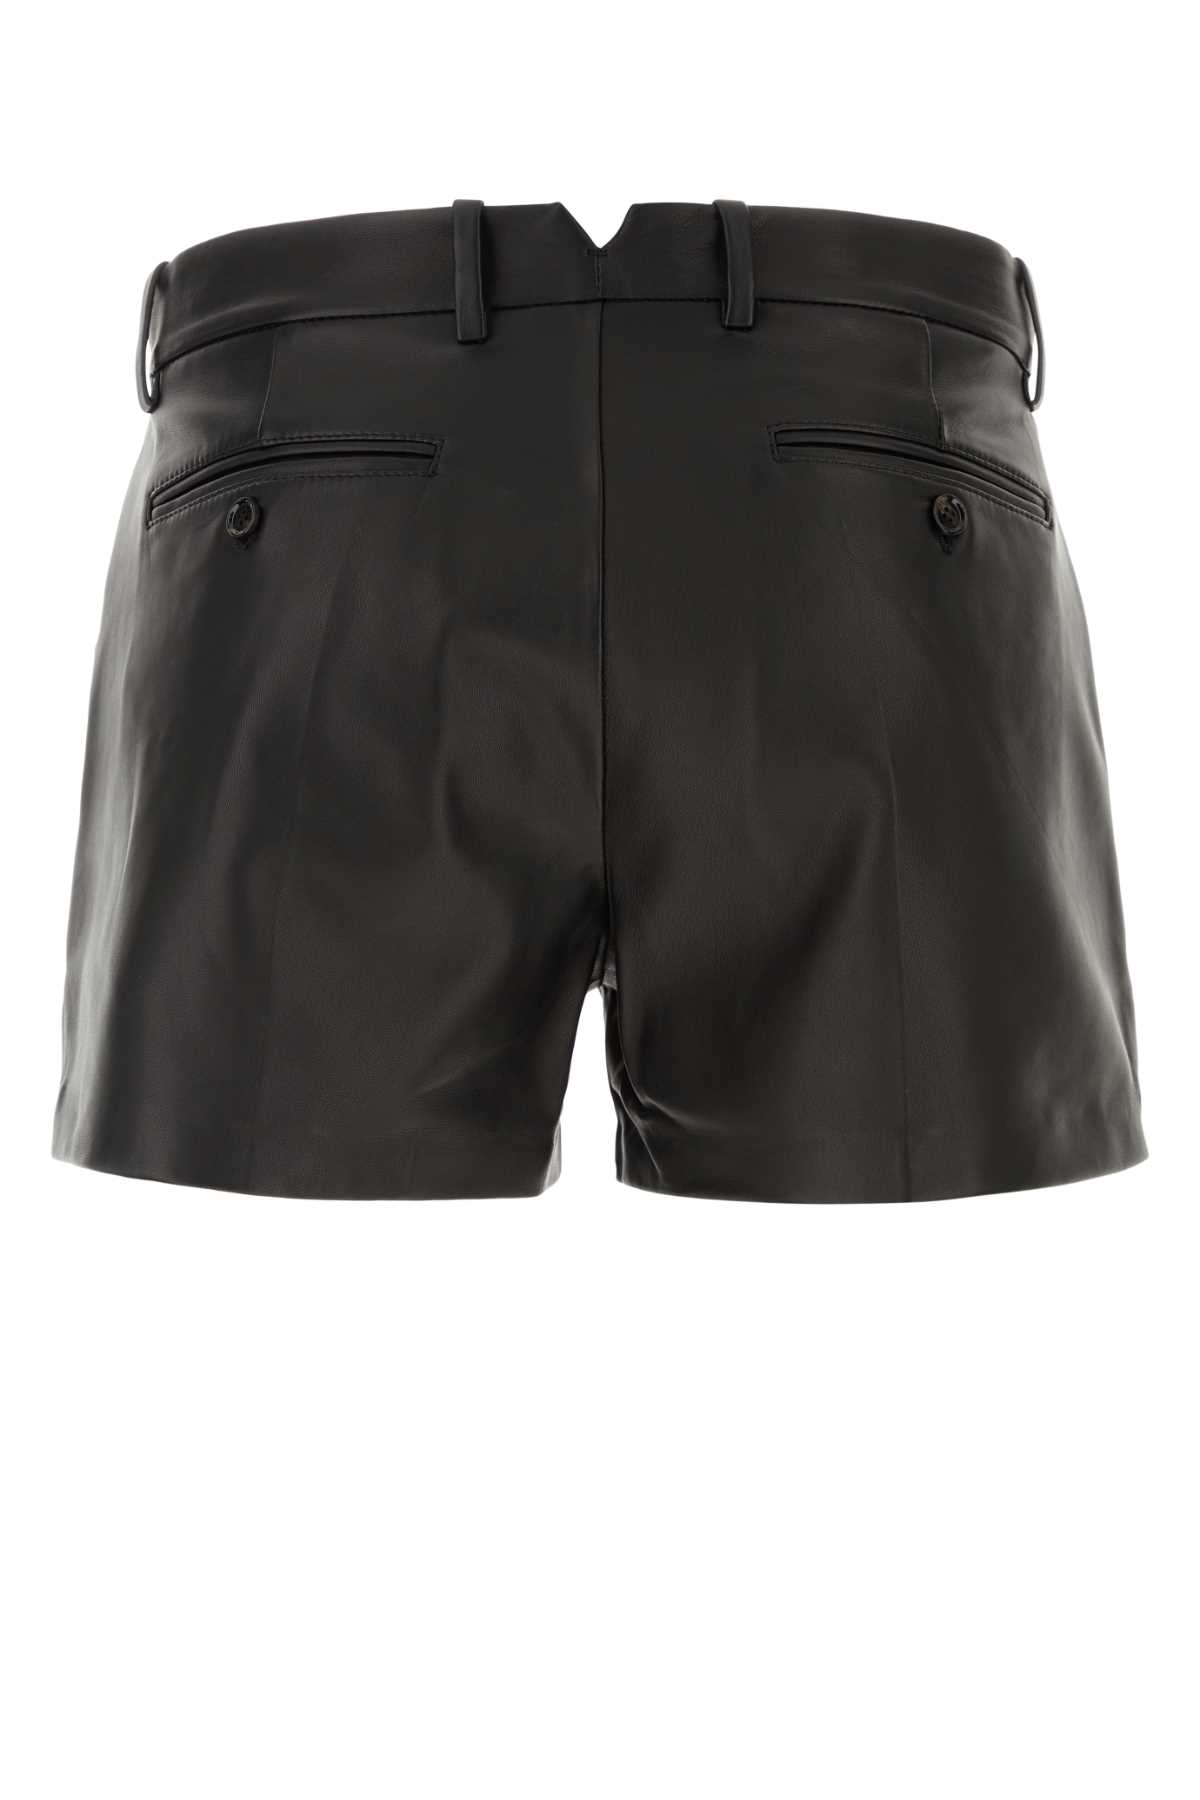 Ami Alexandre Mattiussi Black Leather Shorts